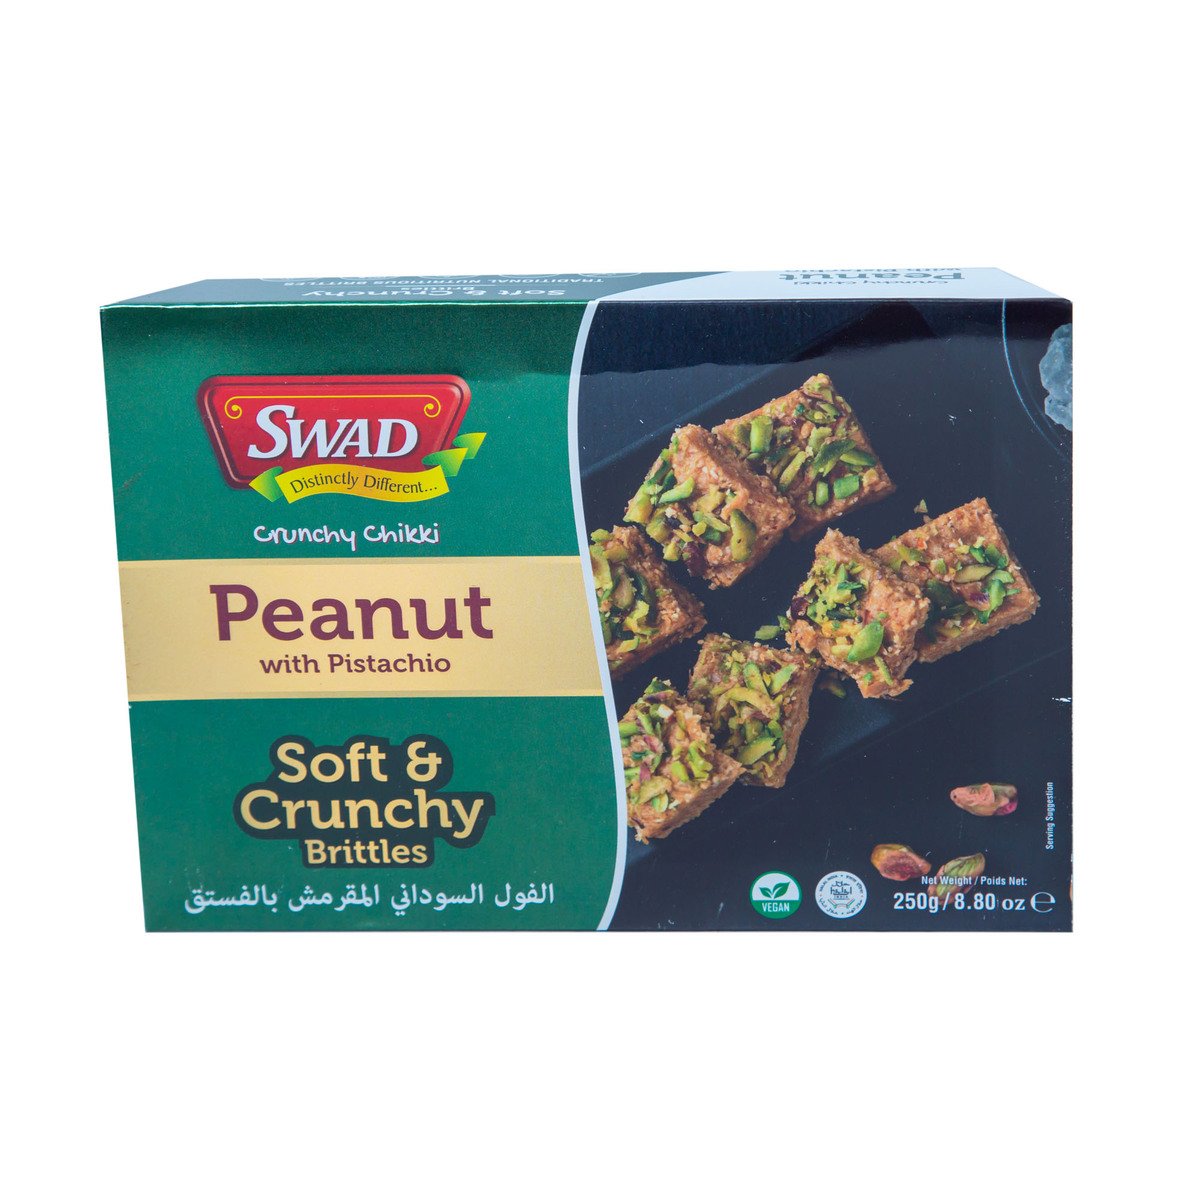 Swad Soft & Crunchy Brittles Peanut With Pistachio 250 g